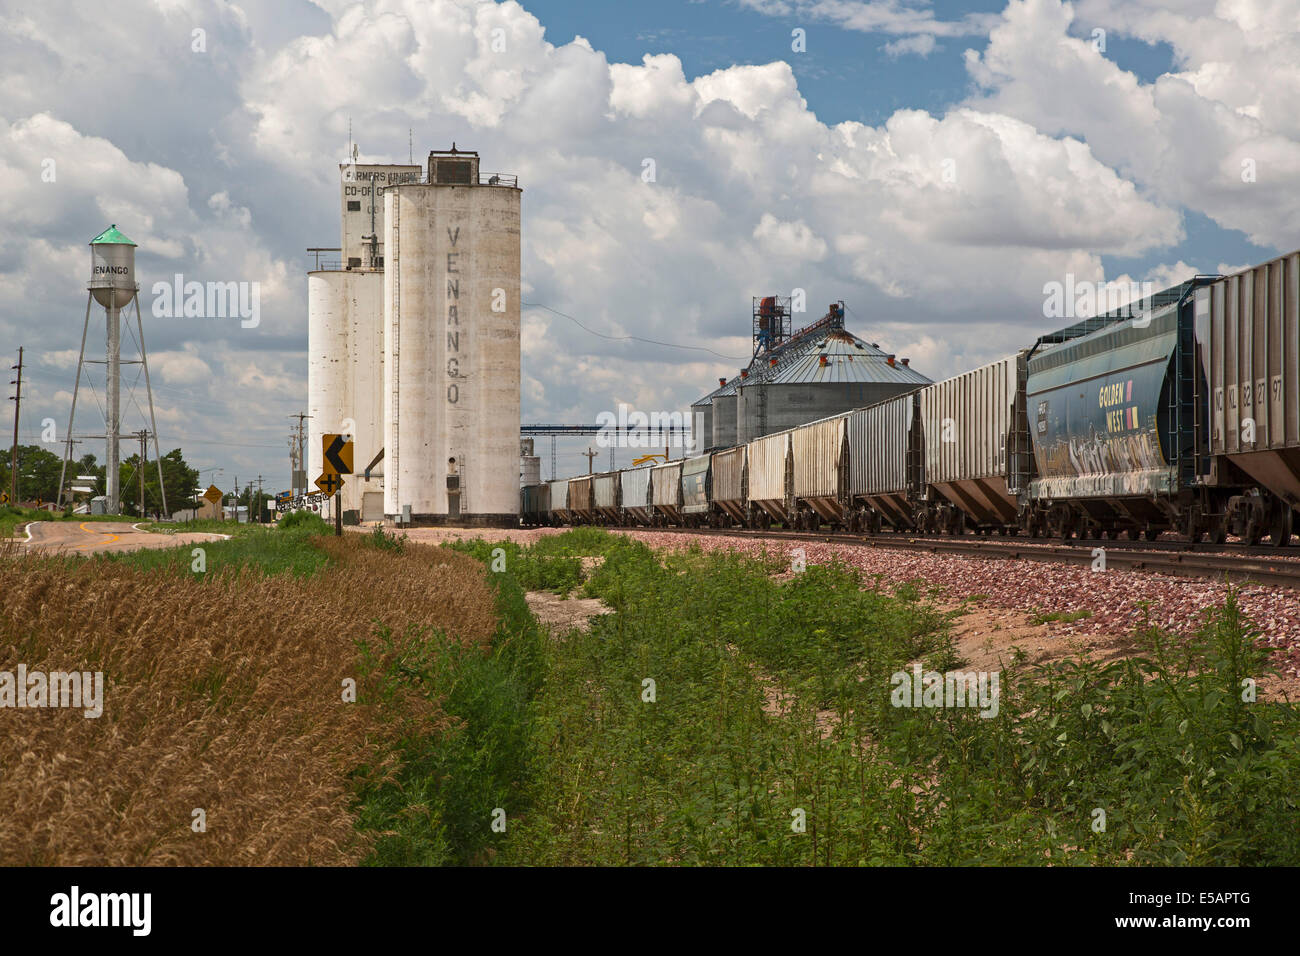 Venango, Nebraska - Grain elevators and a railroad in the wheat growing area of western Nebraska. Stock Photo